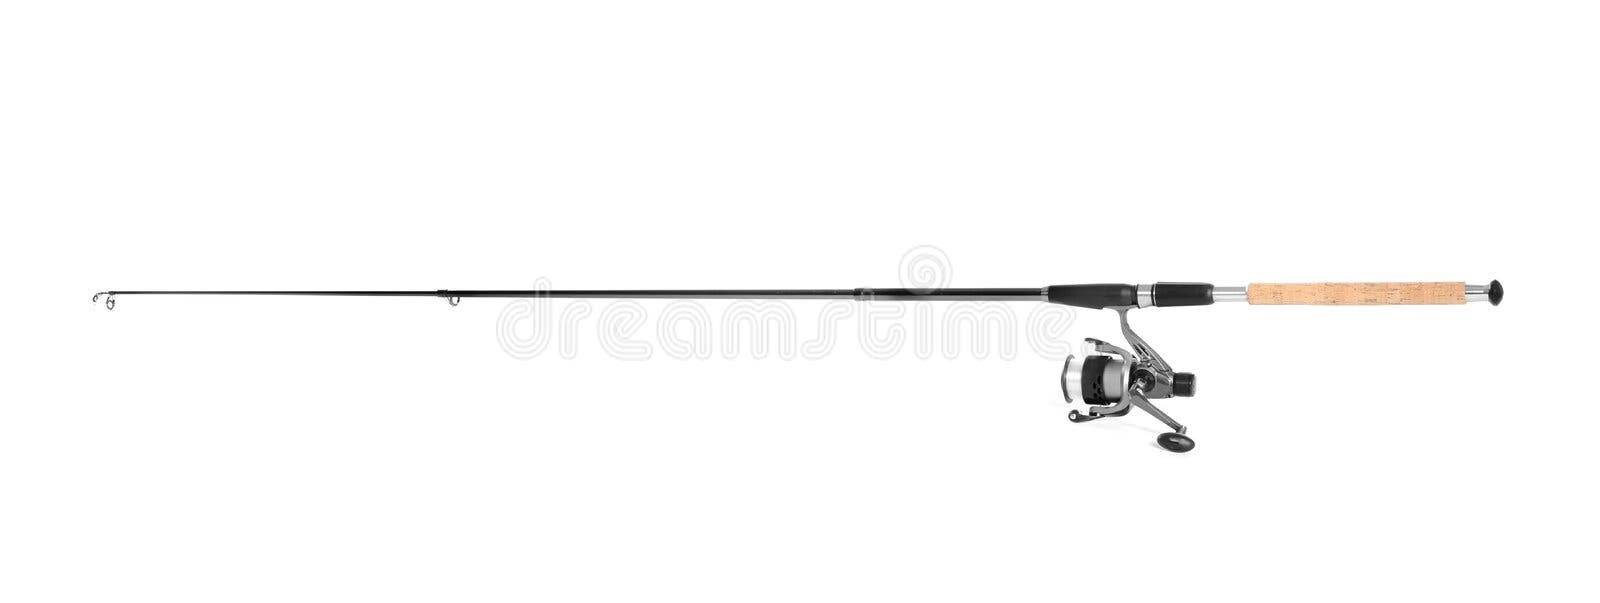 Modern Fishing Rod with Reel Stock Image - Image of pole, bobbin